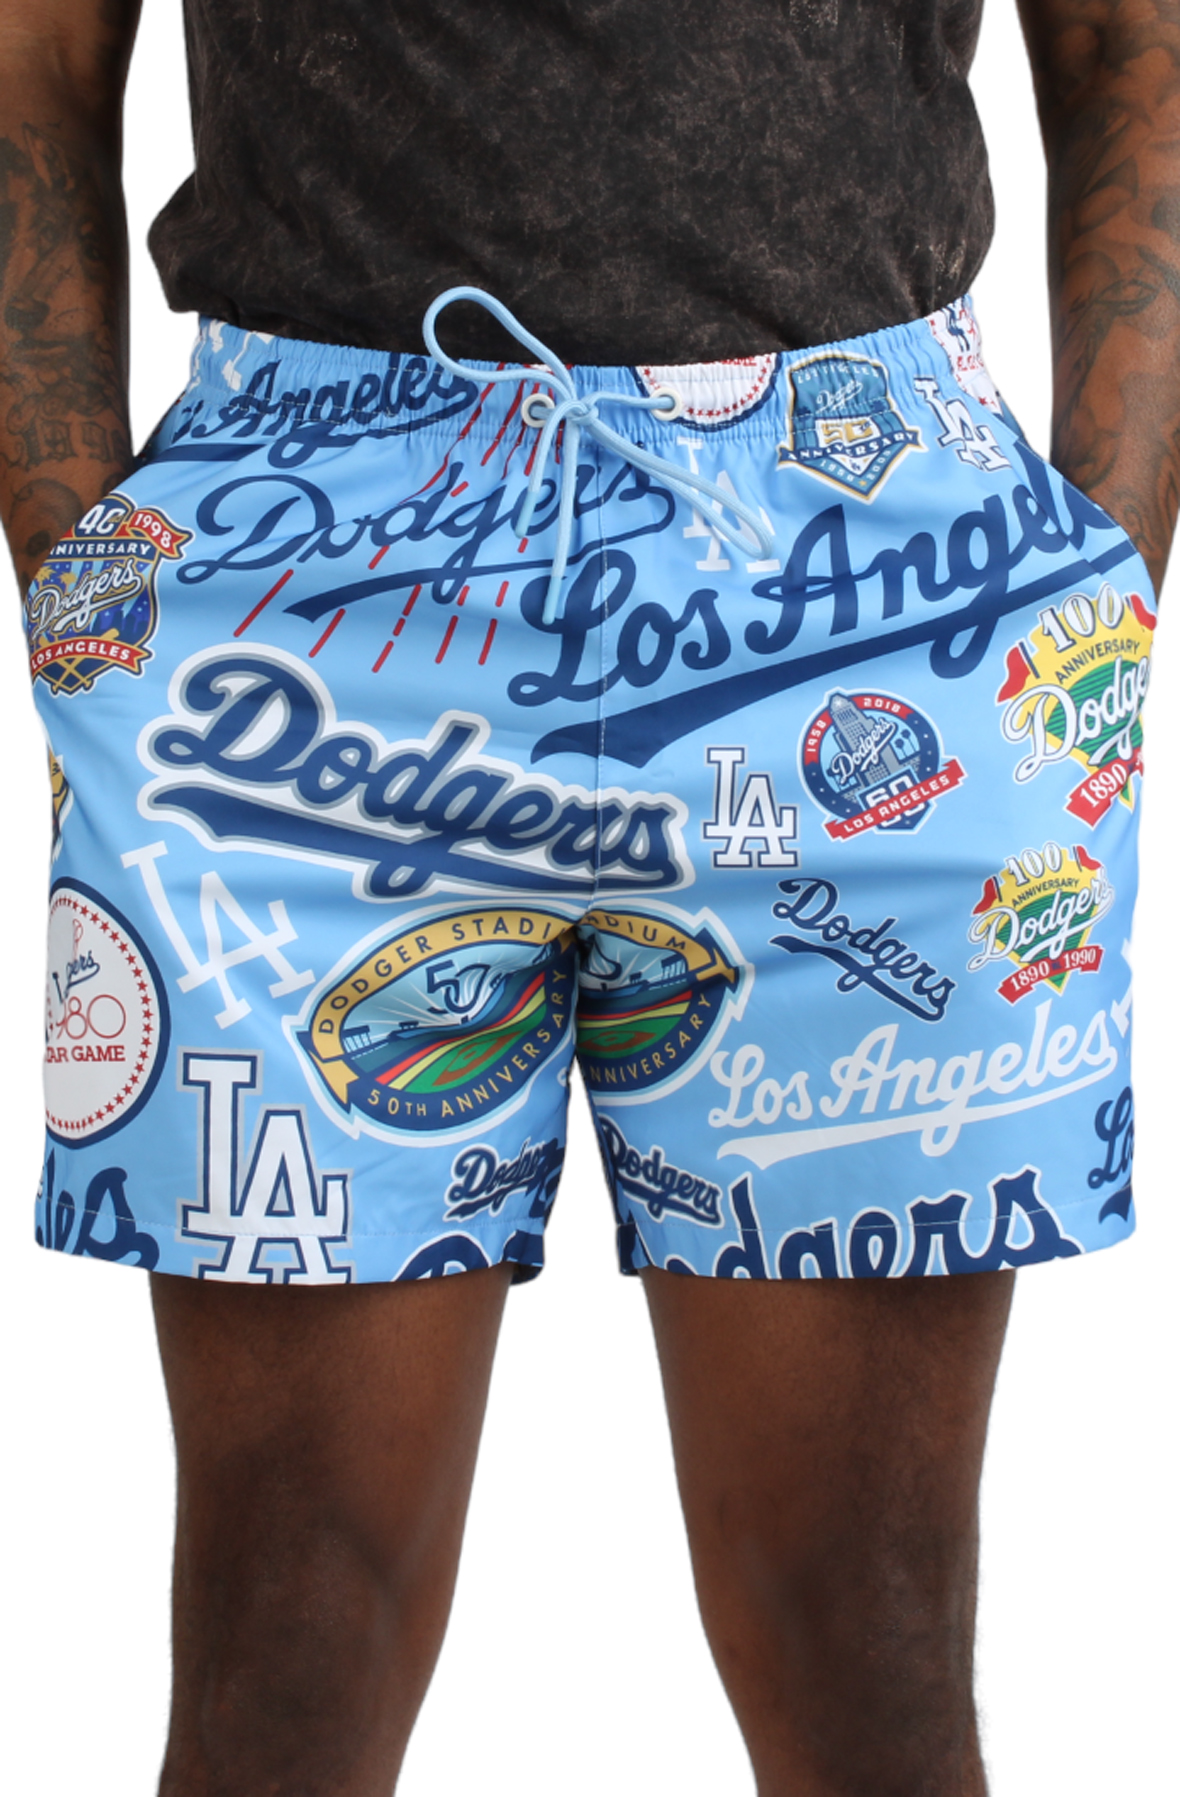 Shop Pro Standard Los Angeles Dodgers Pro Team Shorts LLD331605-BLACK black